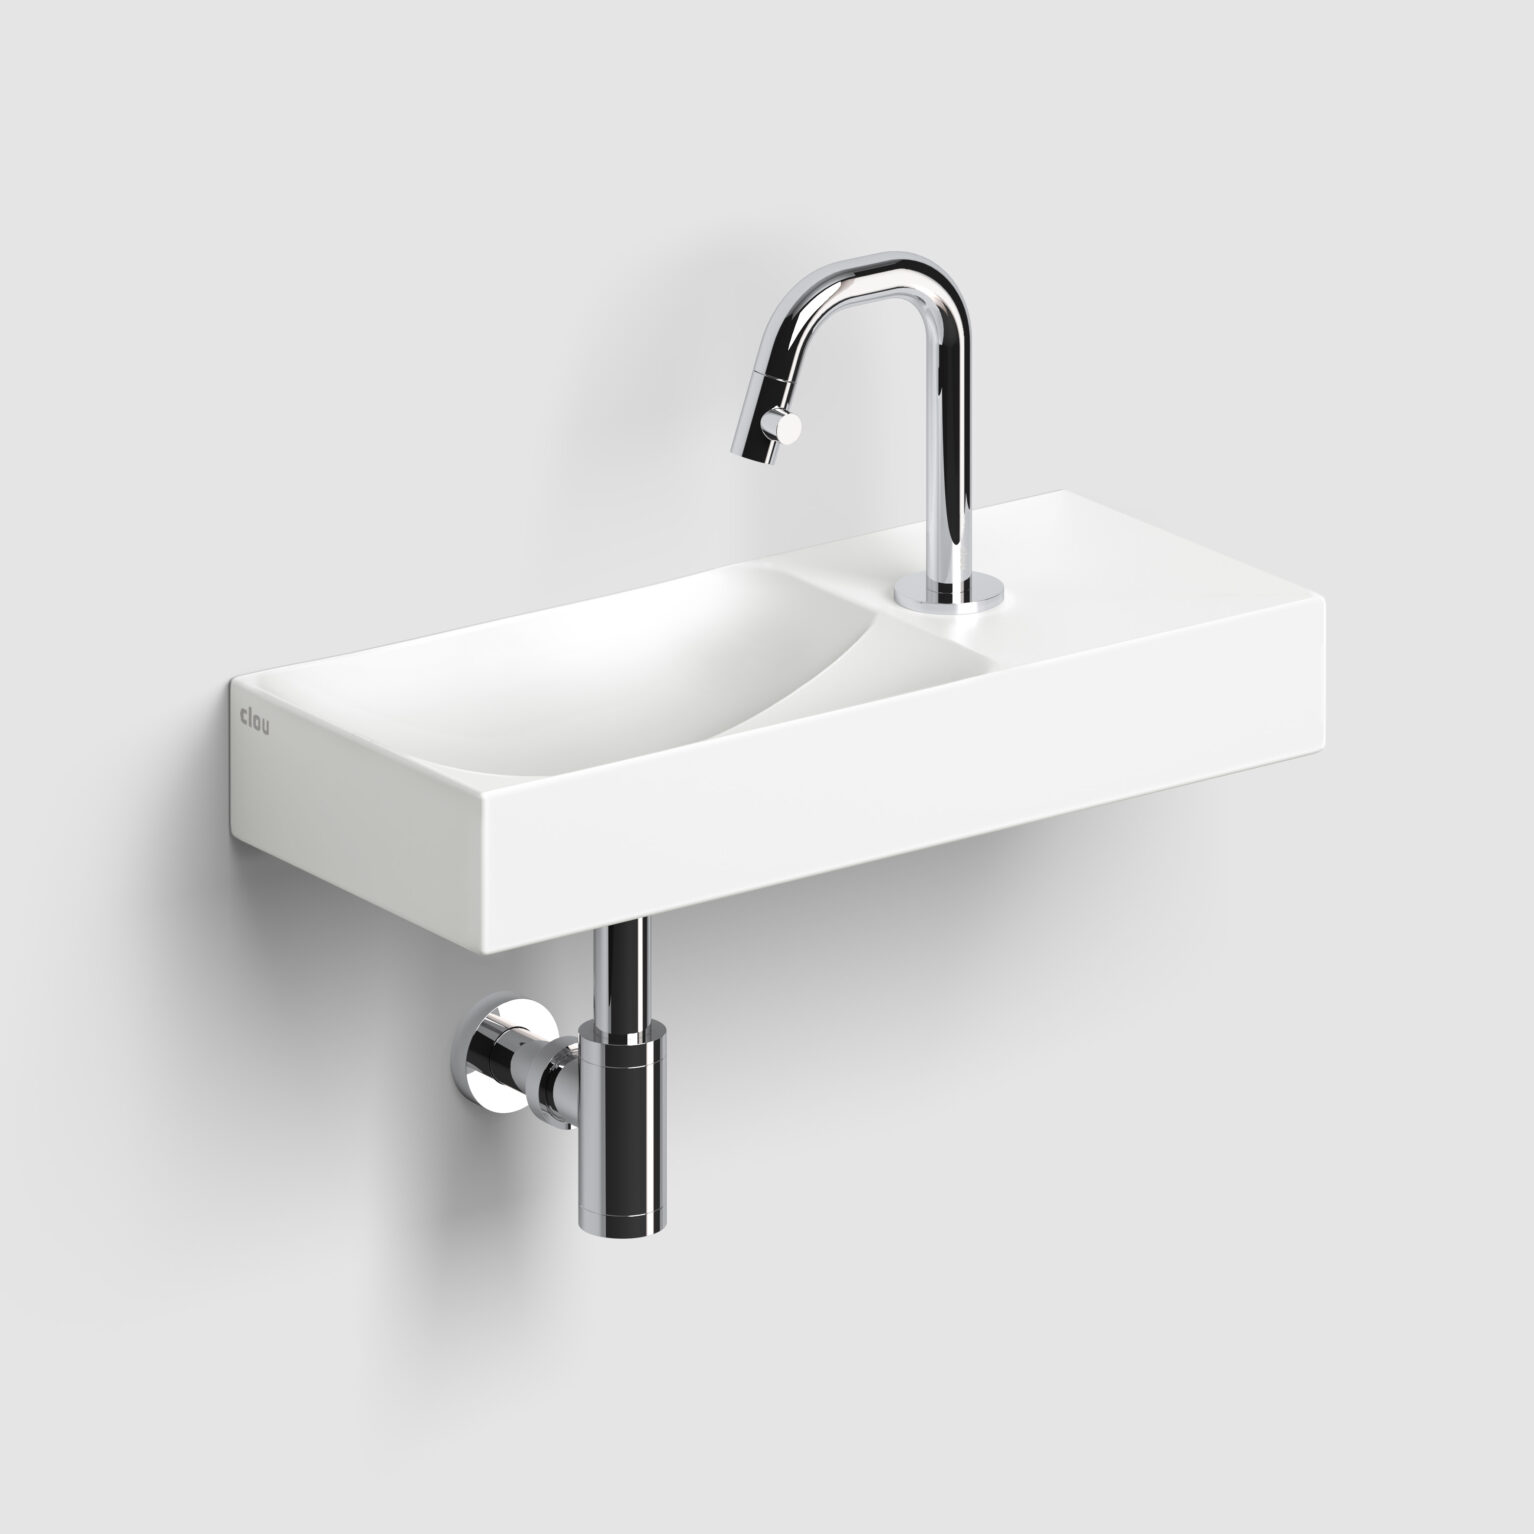 Fontein-wastafel-toilet-badkamer-luxe-sanitair-Vale-clou-CL030216201R-mat-wit-keramiek-45cm-MiniSuk-sifon-Kaldur-kraan